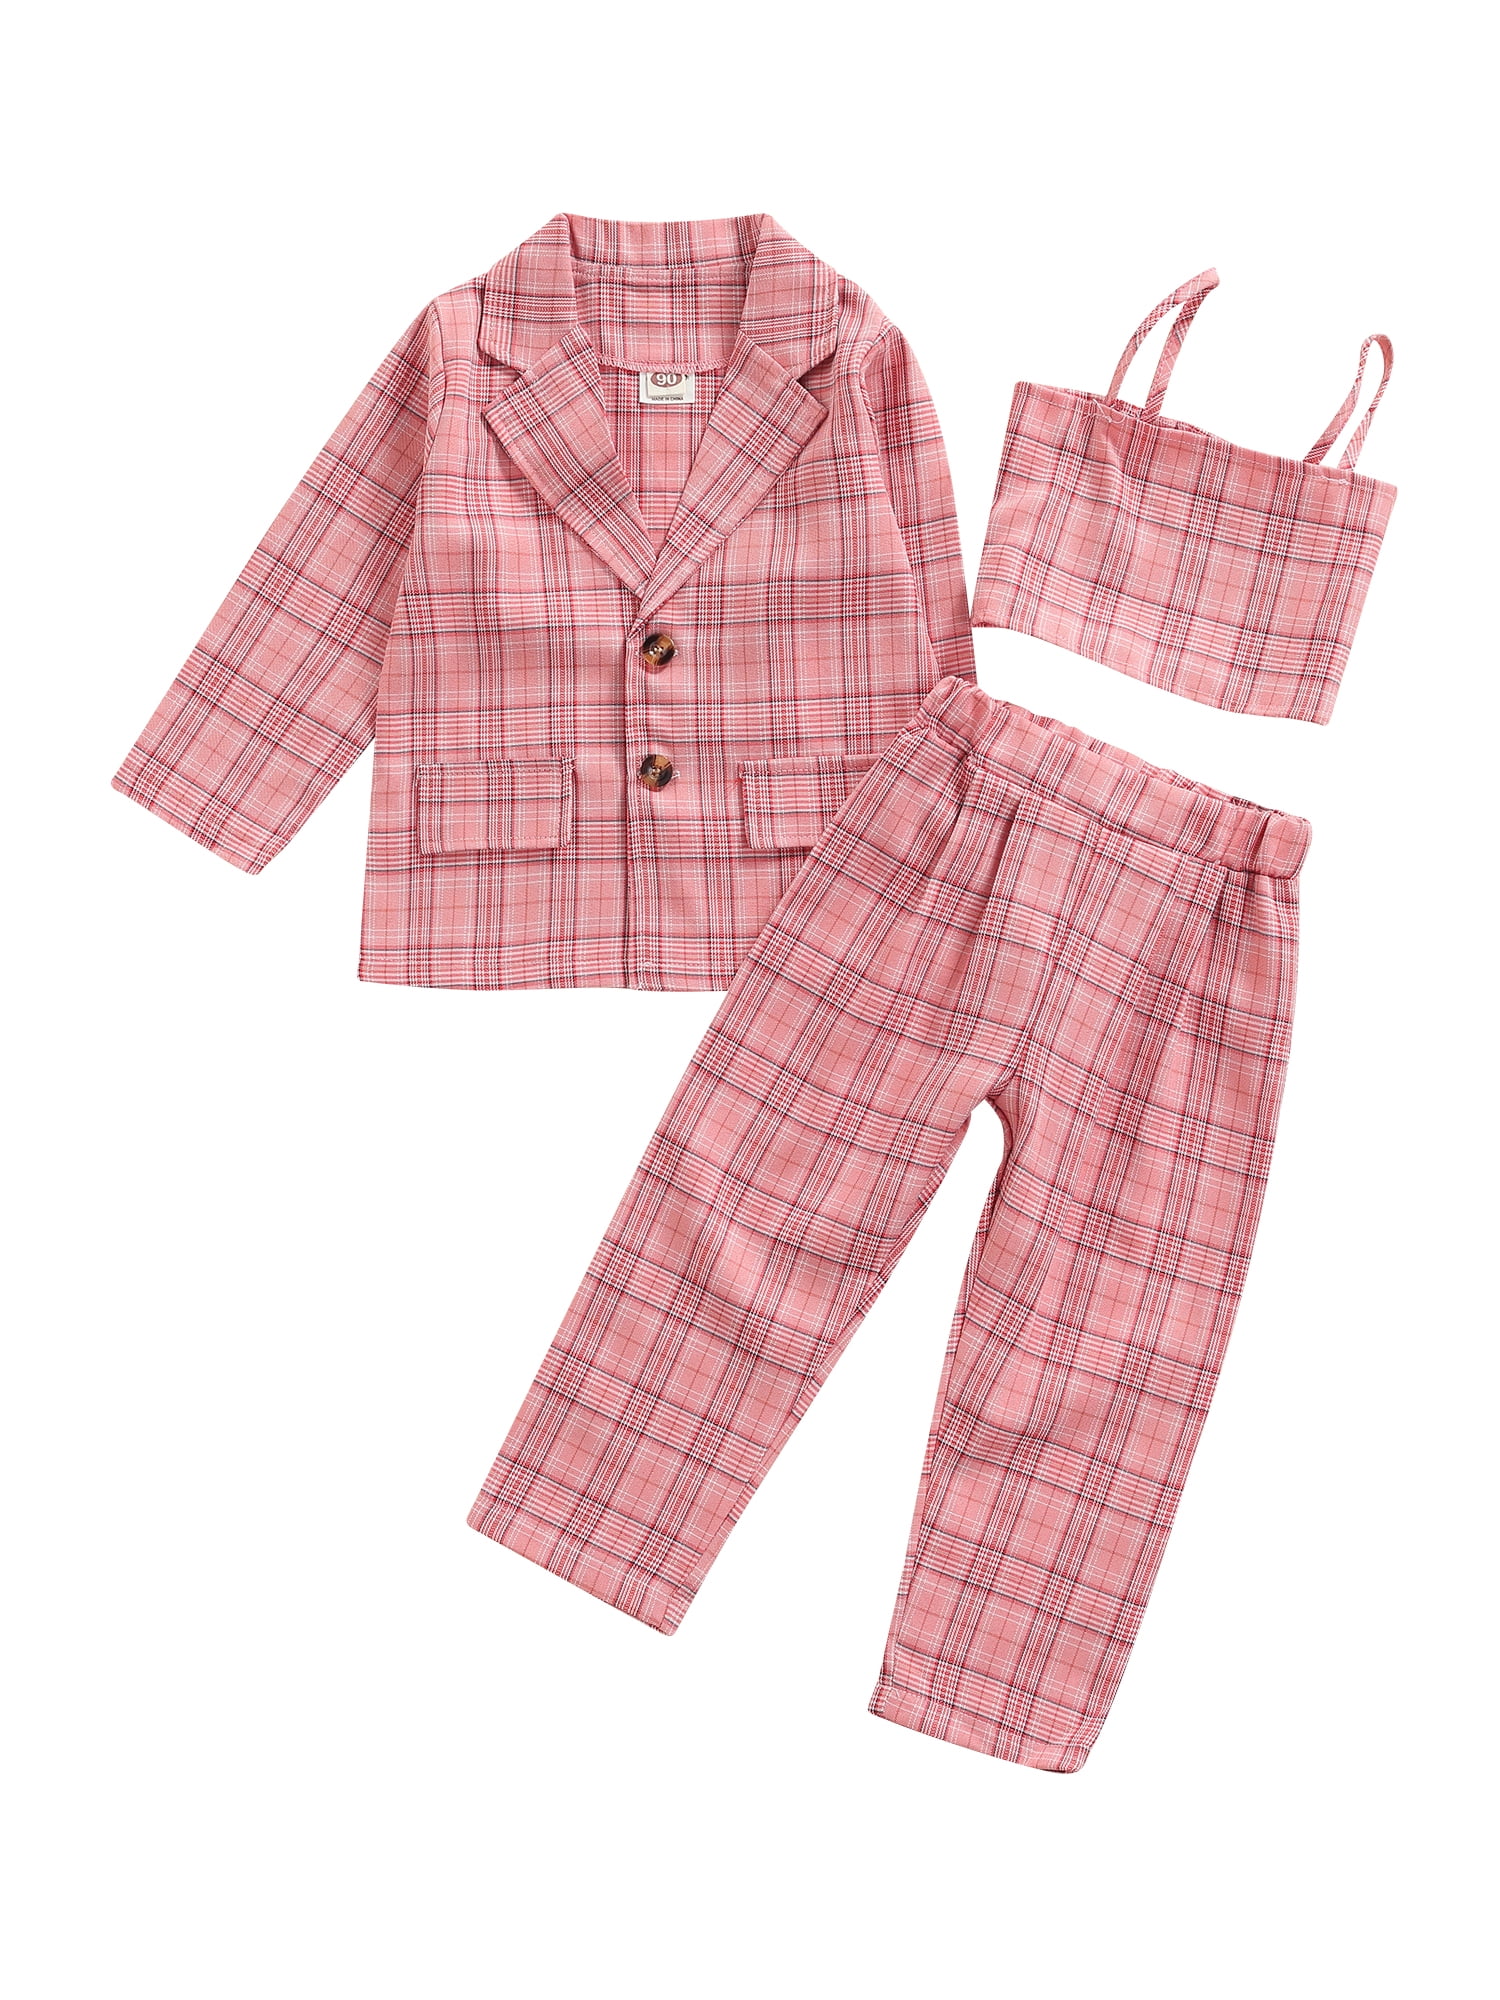 US Toddler Baby Girl Winter Clothes Plaid Zipper Coat Top+Long Pants Outfit 3PCS 